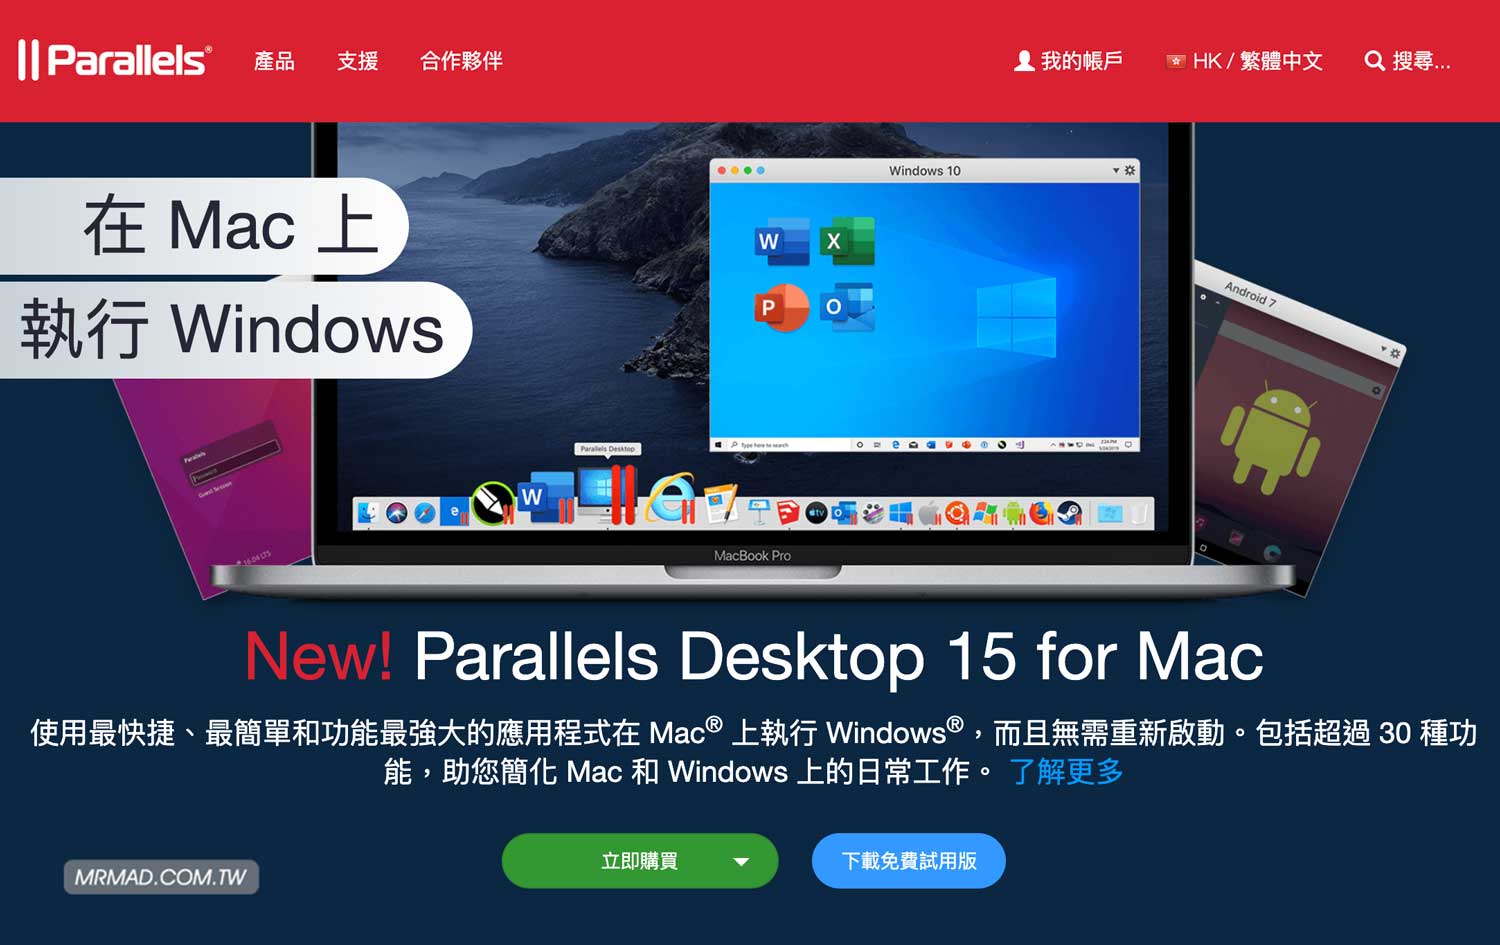 windows 10 parallels desktop